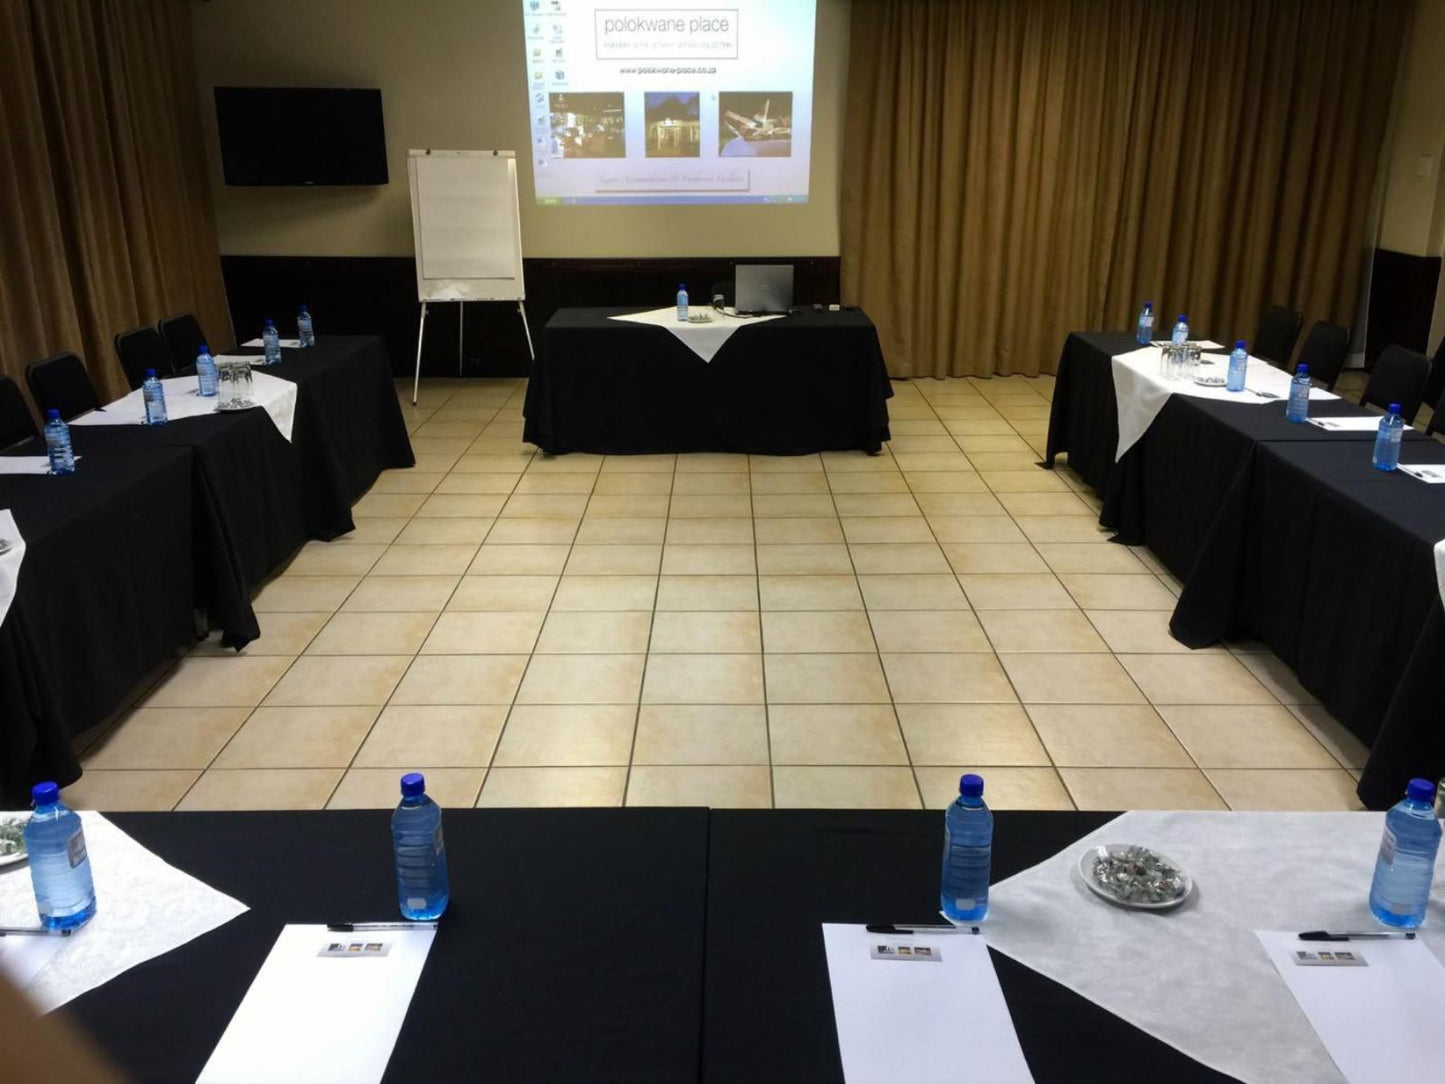 Polokwane Place Polokwane Central Polokwane Pietersburg Limpopo Province South Africa Seminar Room